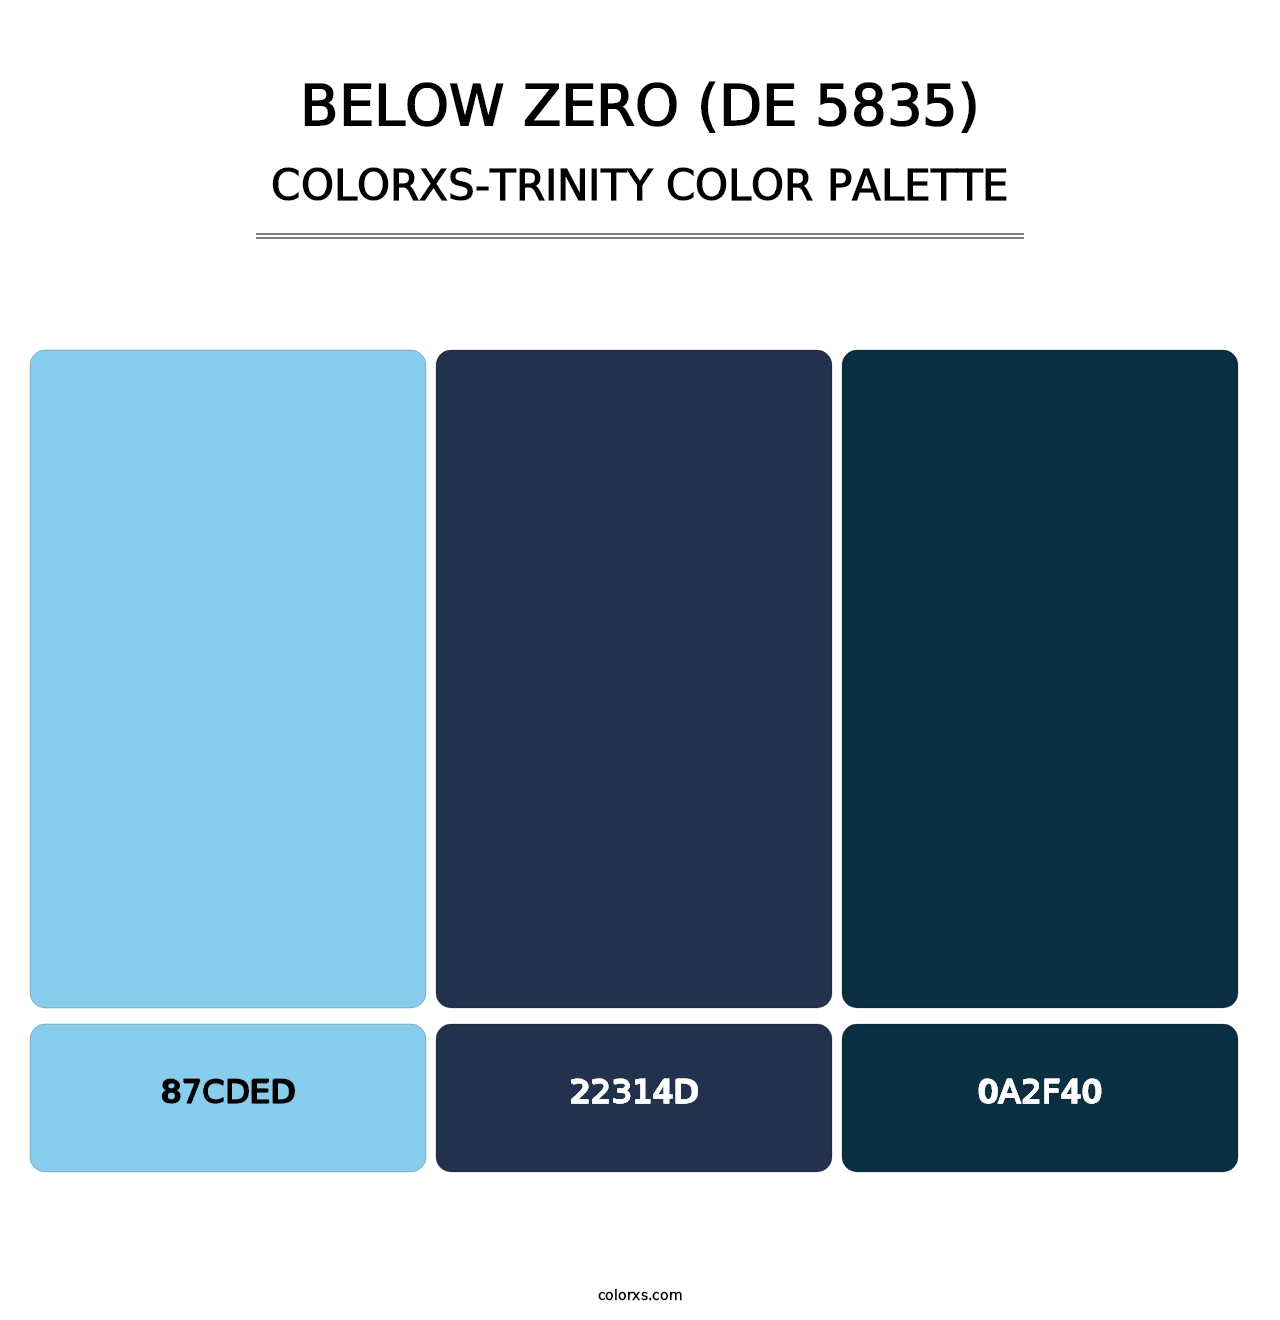 Below Zero (DE 5835) - Colorxs Trinity Palette